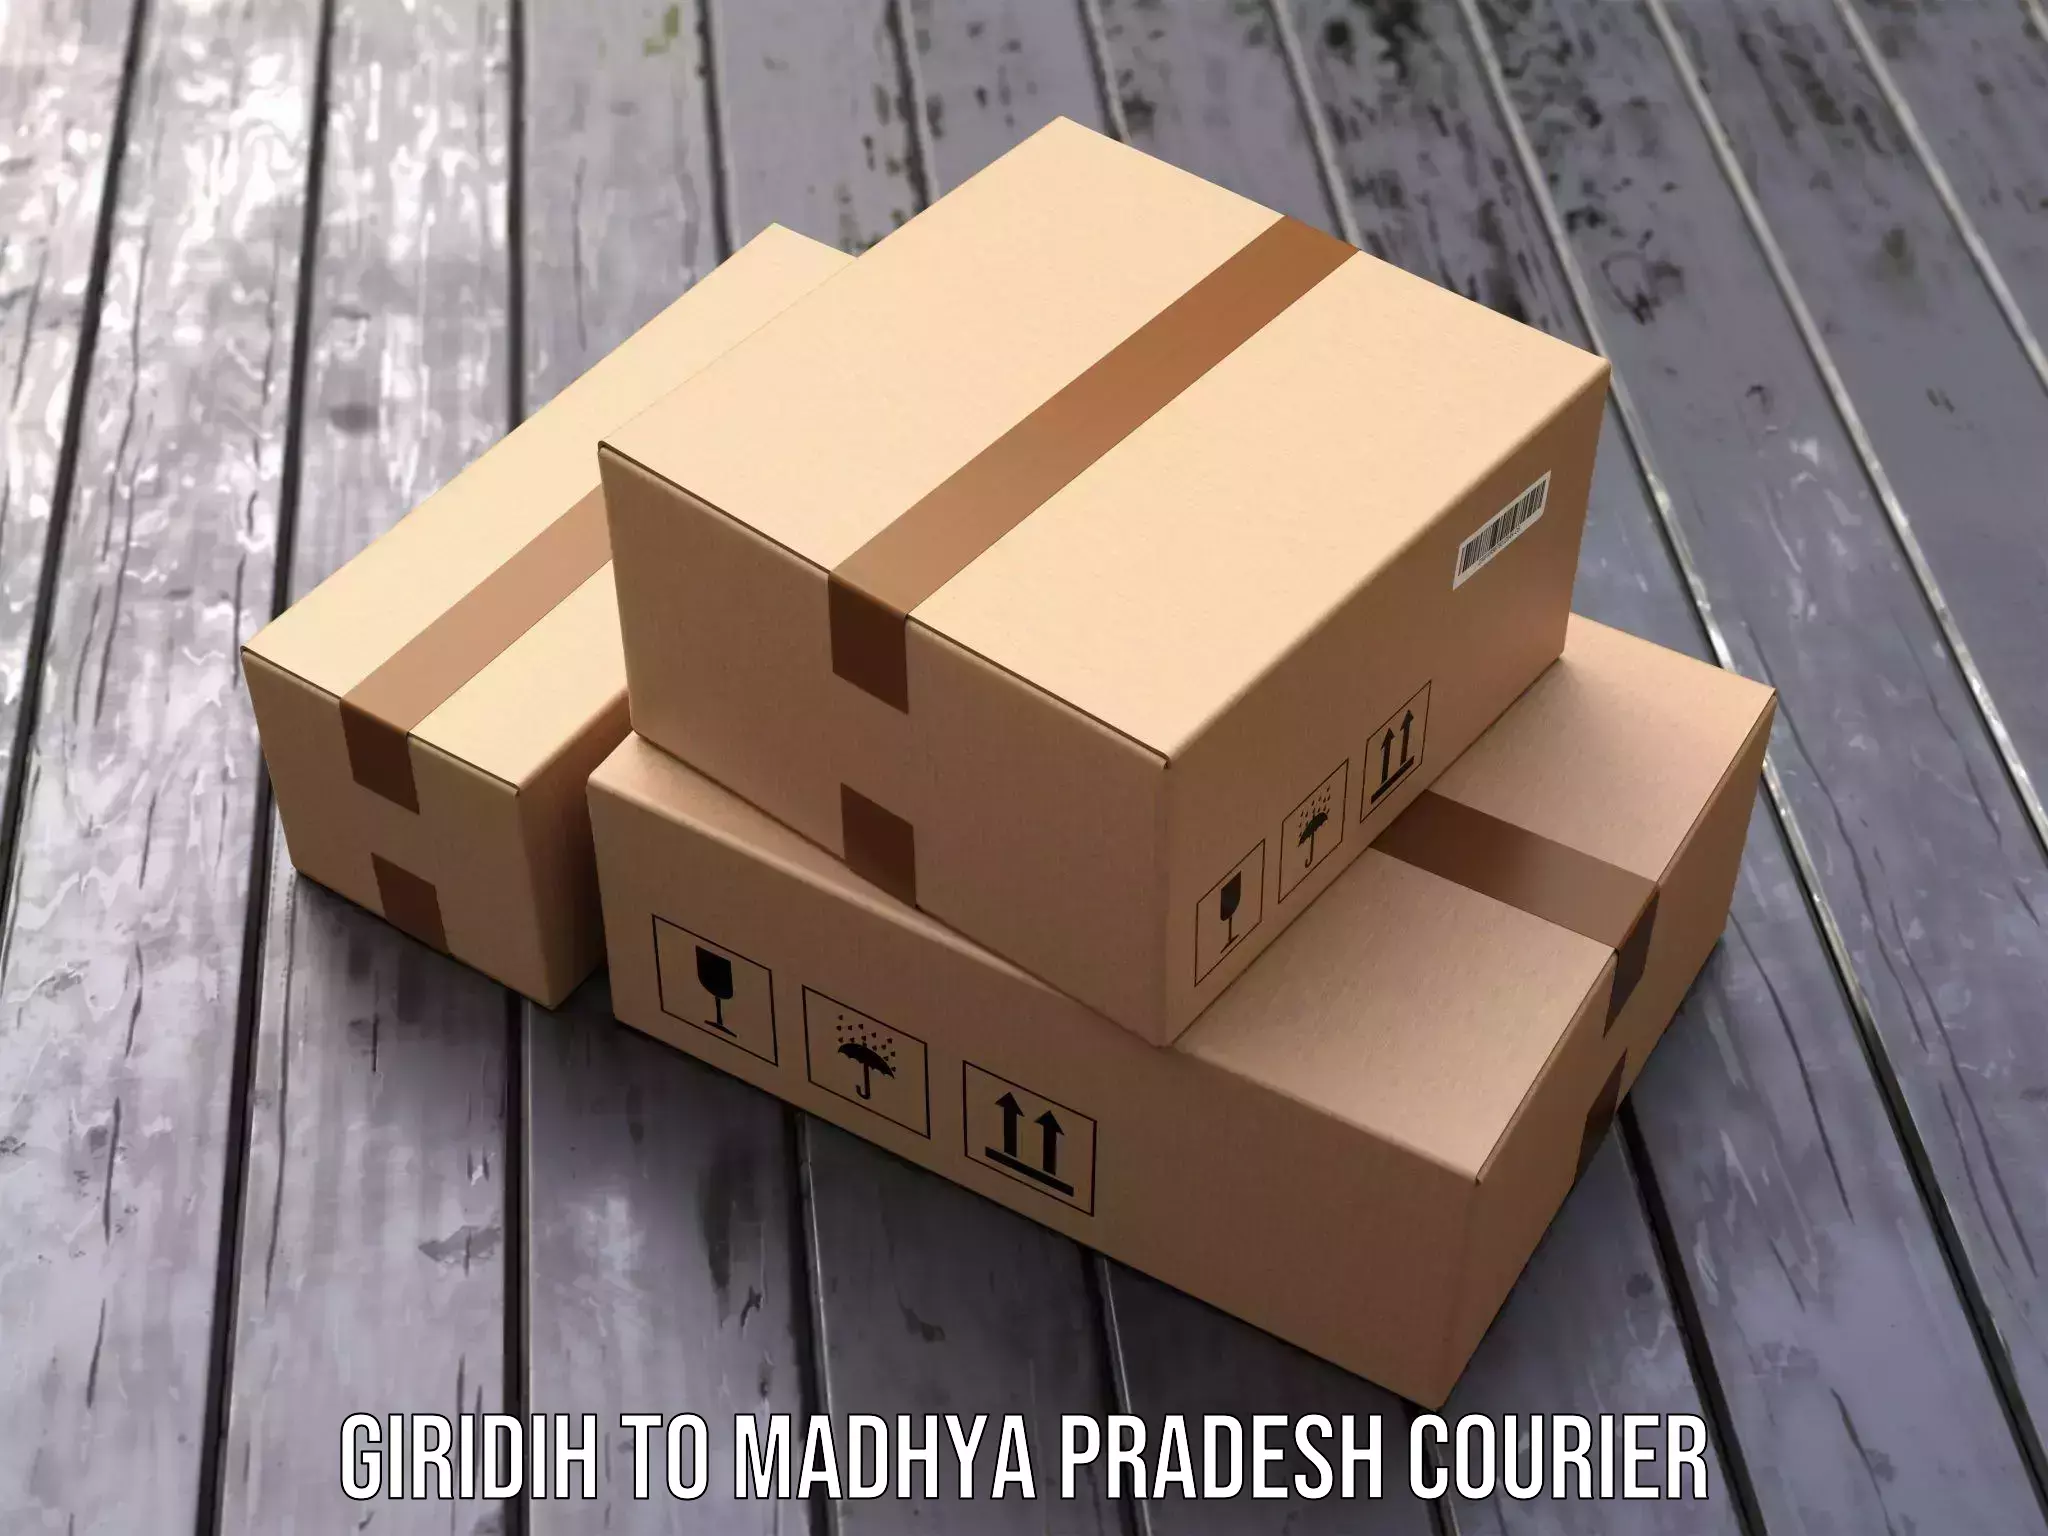 Multi-service courier options Giridih to Satna